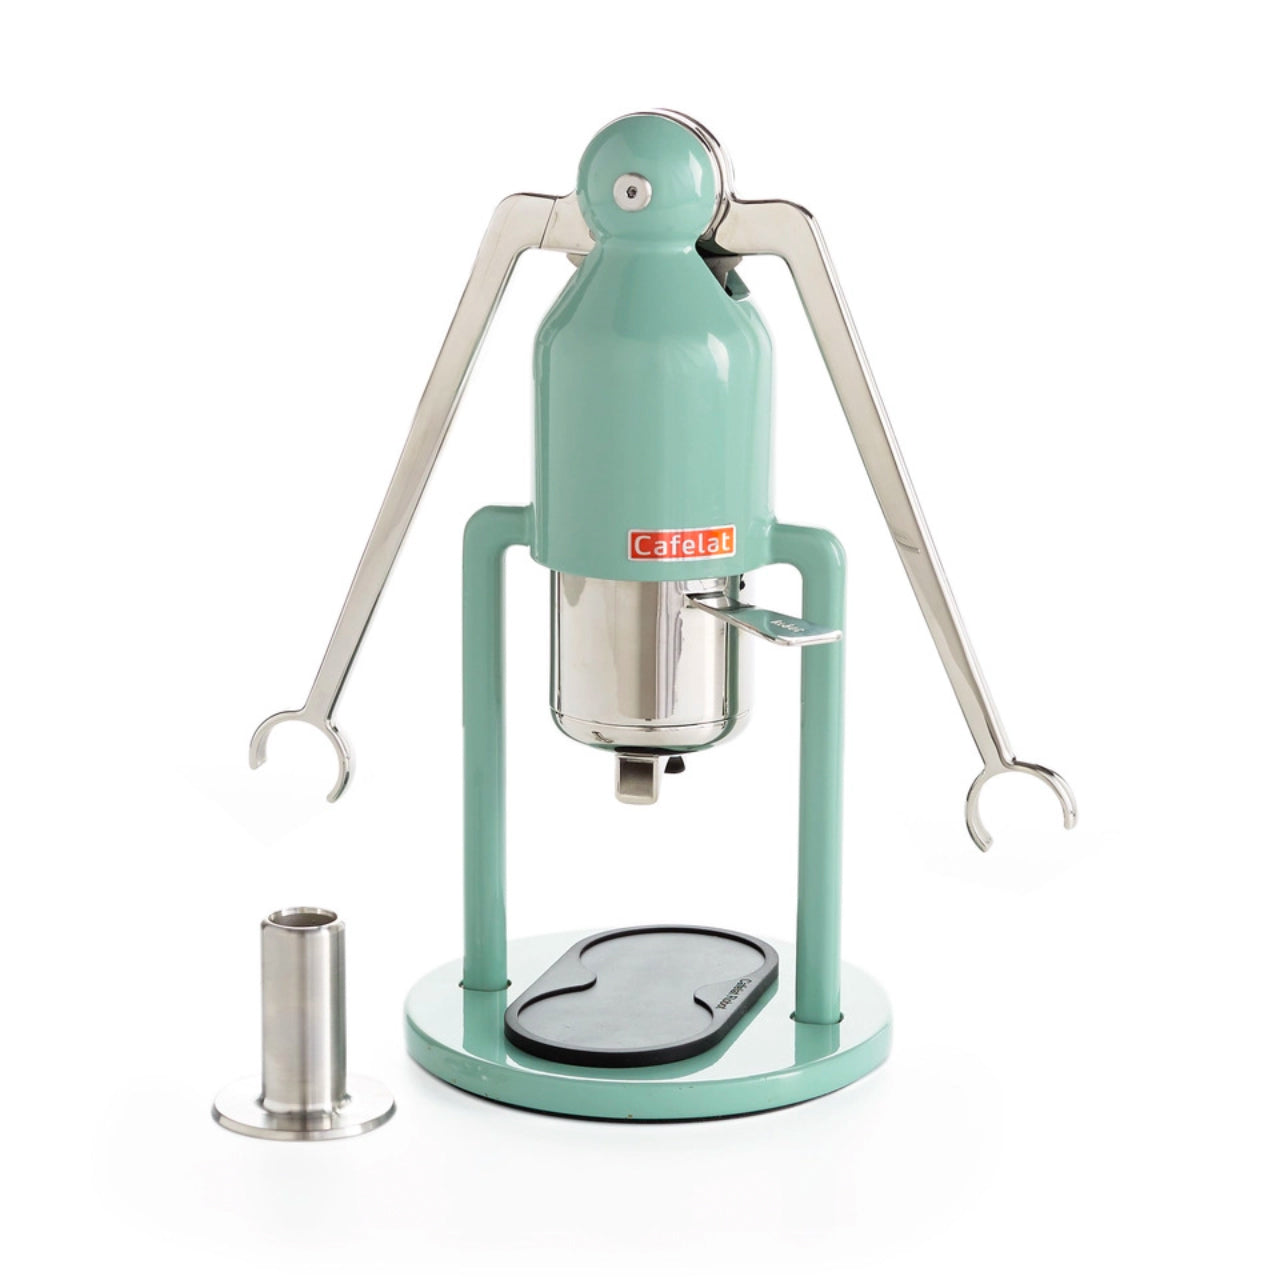 Cafelat Robot Espresso Maker, Retro Green